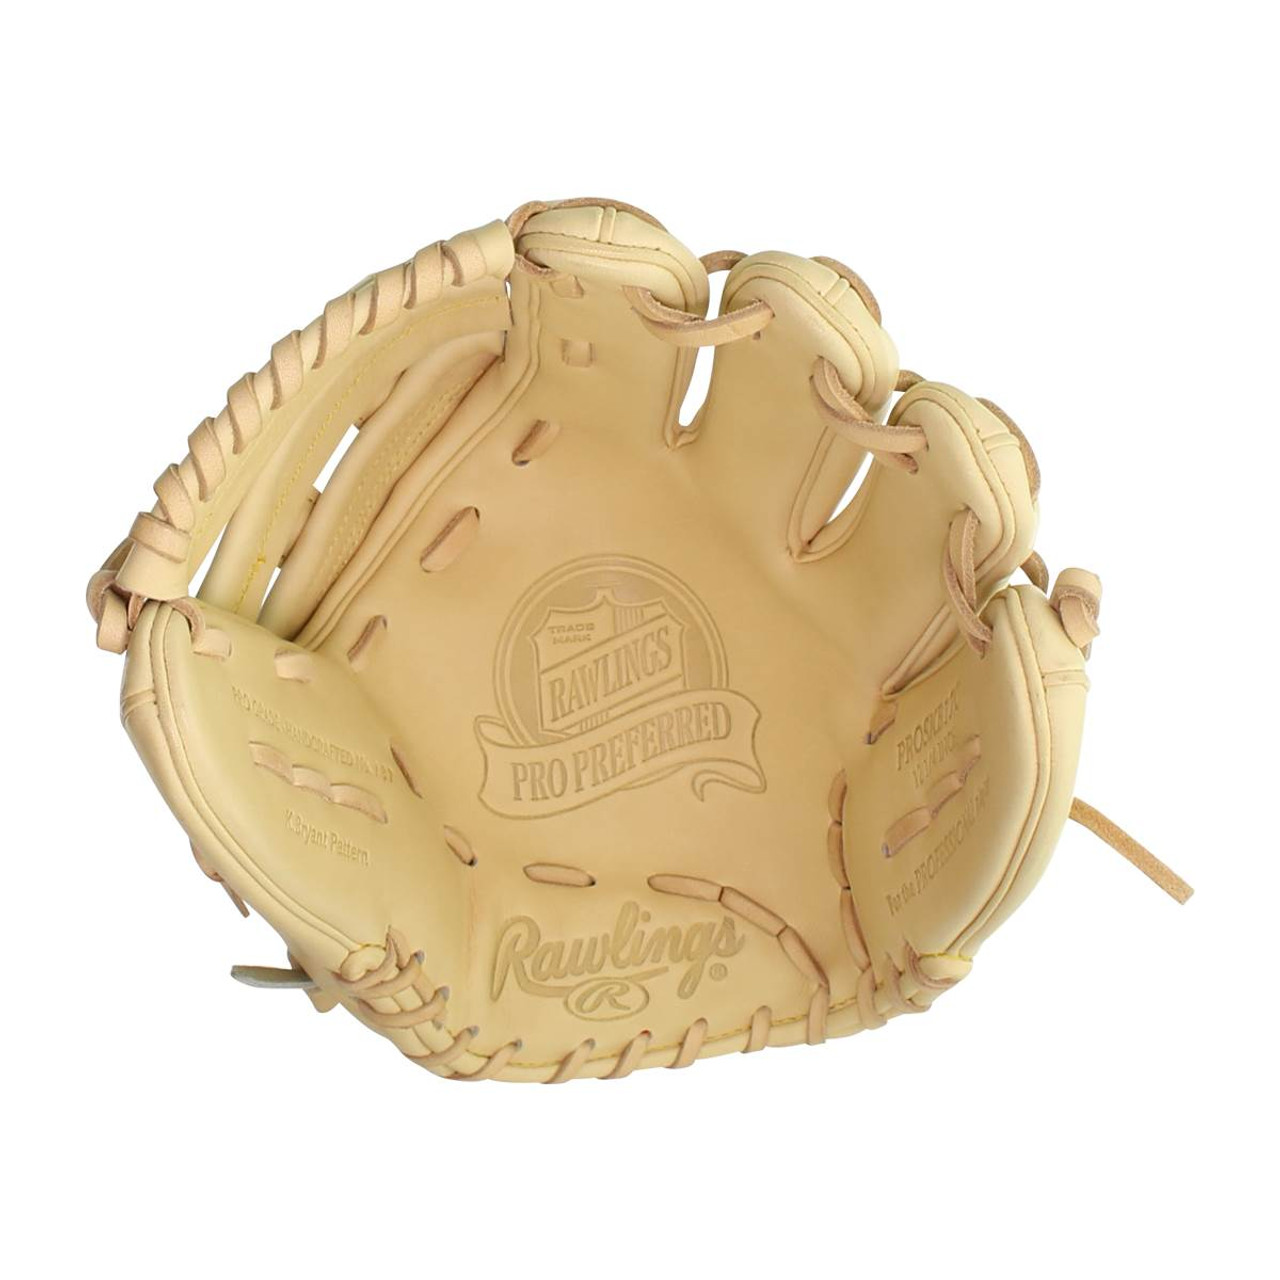 Rawlings Kris Bryant Pro Preferred Baseball Glove 12.25 inch PROSKB17C -  Beacon Sporting Goods